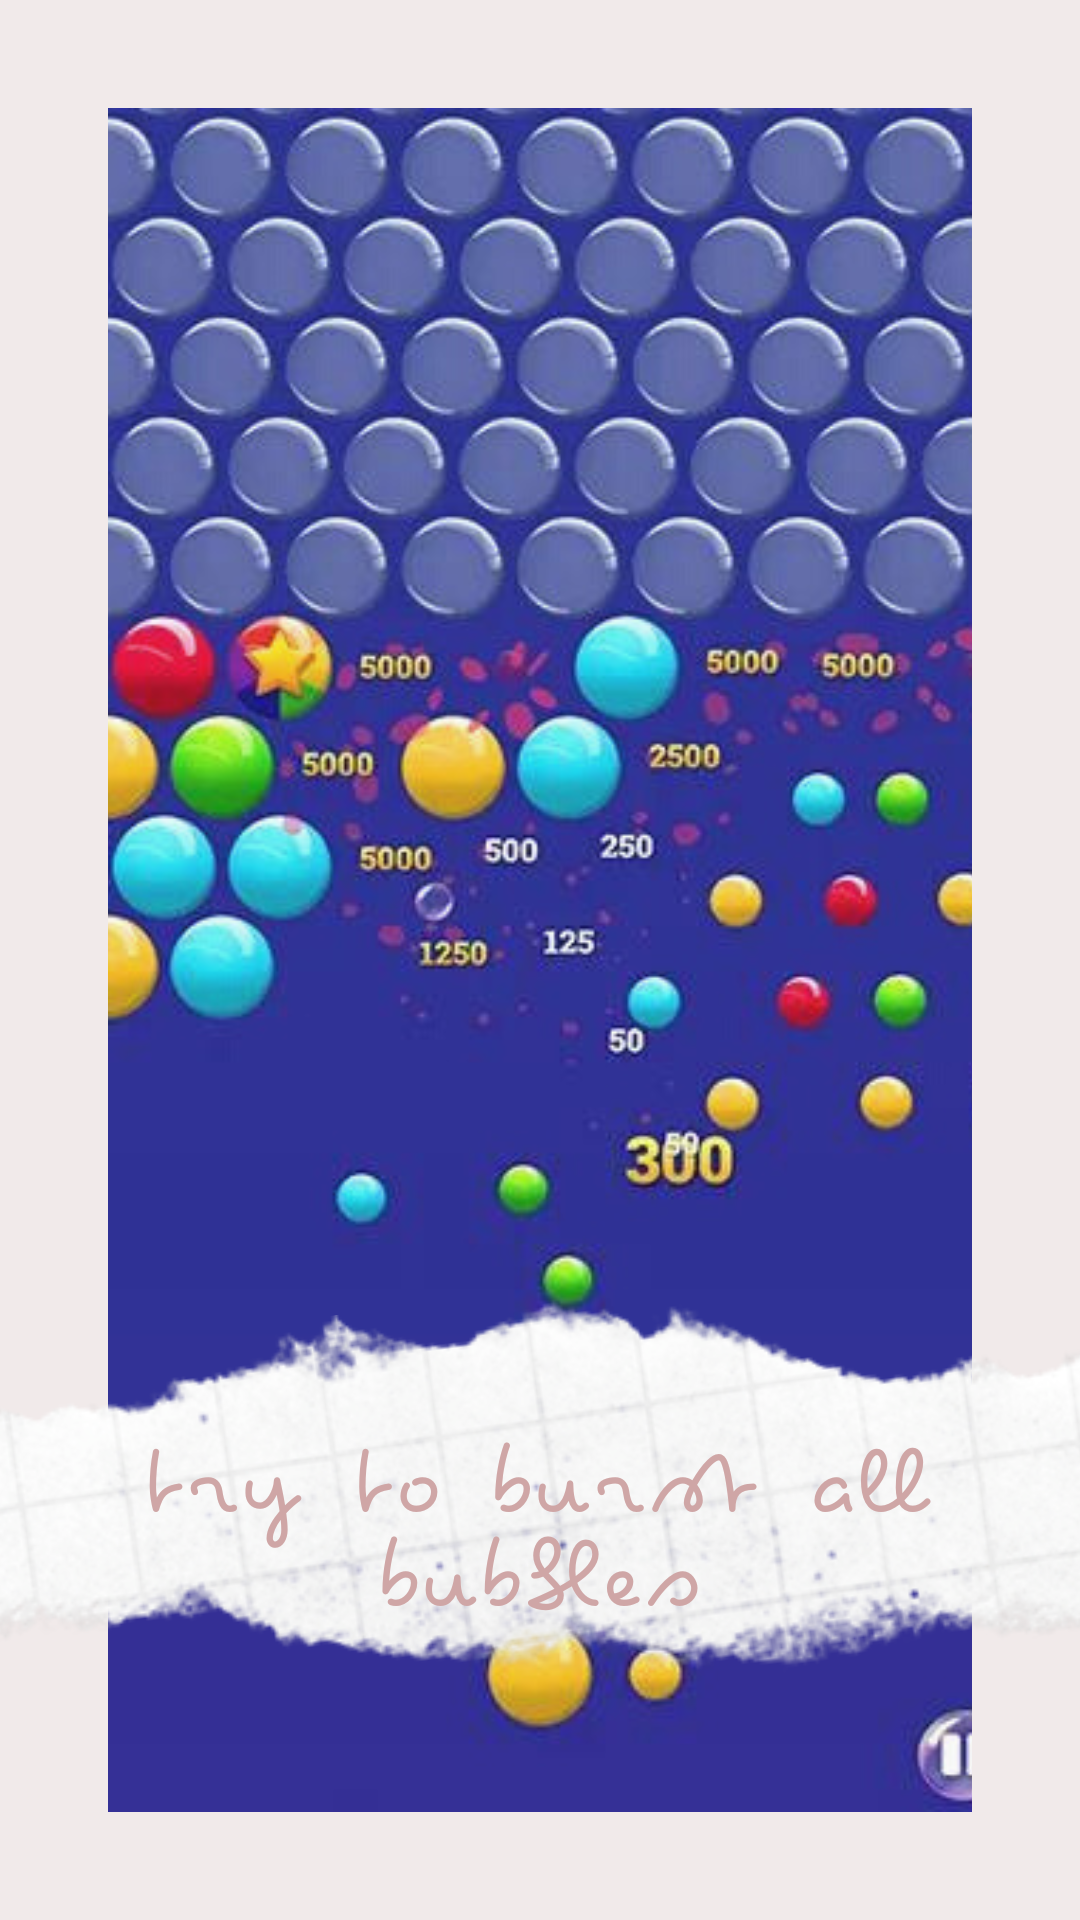 Smarty Bubbles Games  Bubble shooter, Bubble games, Free online games